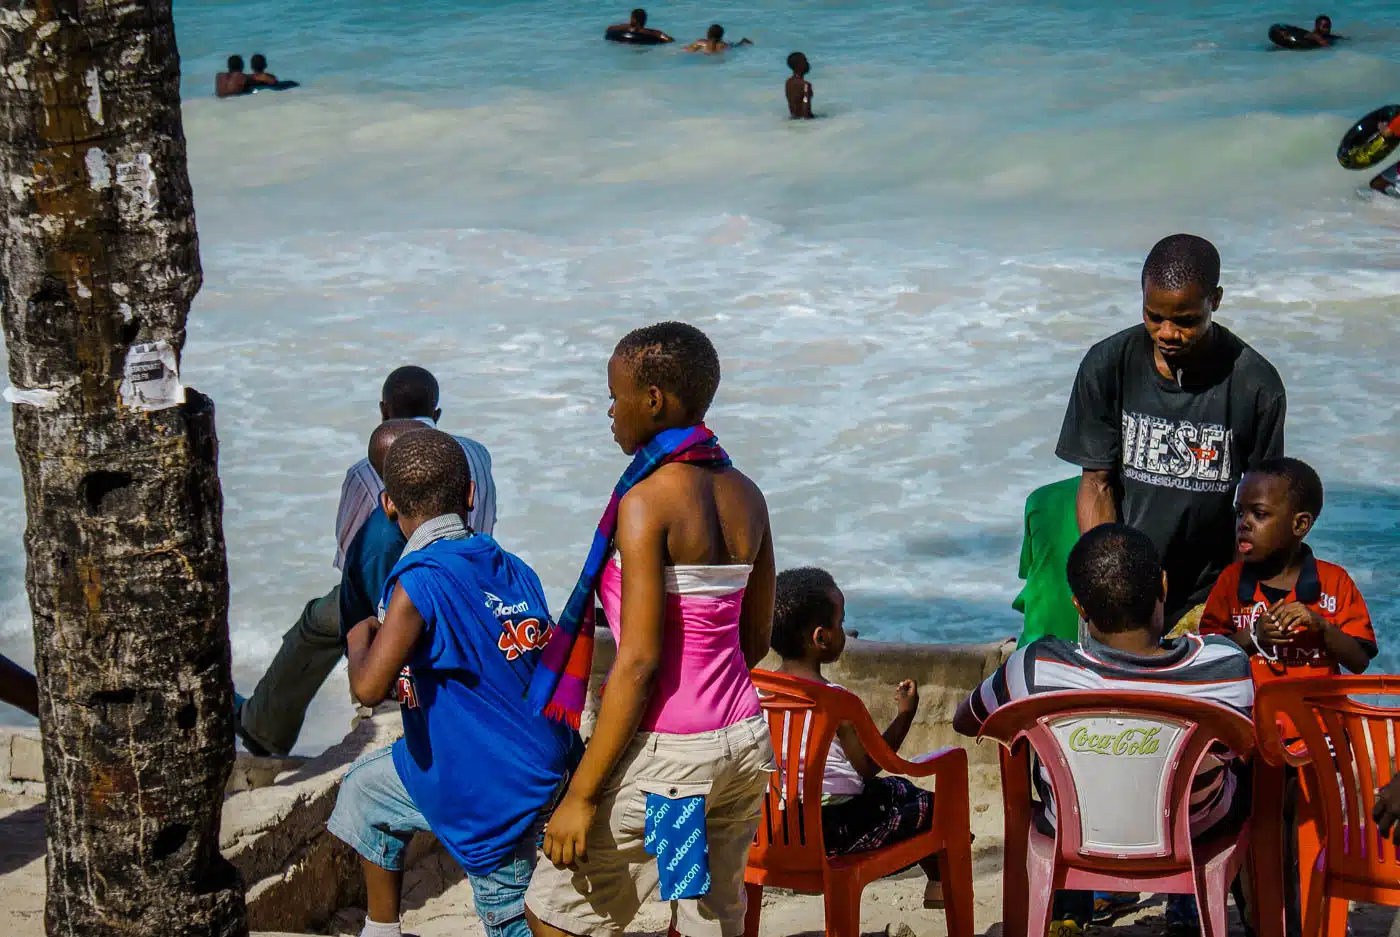 Coco beach - Dar Es Salaam Tanzania and Zanzibar - an exotic adventure. Beaches I Stone Town I Africa Travel I Dar Es Salaam #traveldestinations #traveltheworld #tanzania